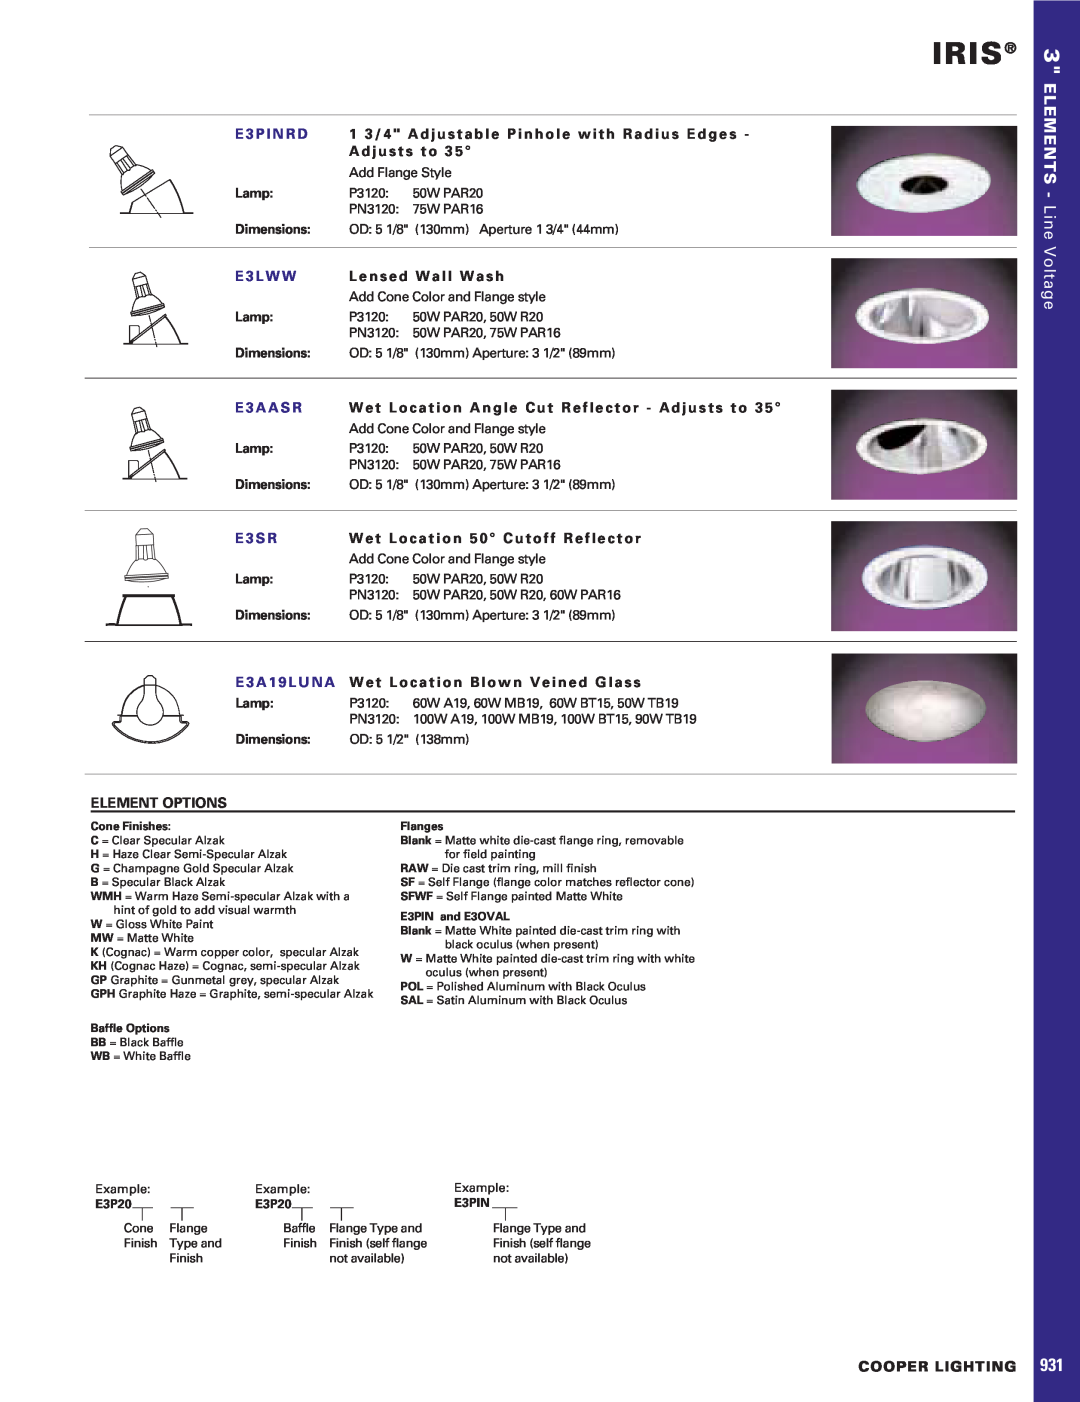 Cooper Lighting 931 dimensions Iris, ELEMENTS - Line Voltage, E 3 P I N R D, A d j u s t s t o, E 3 L W W, E 3 A A S R 